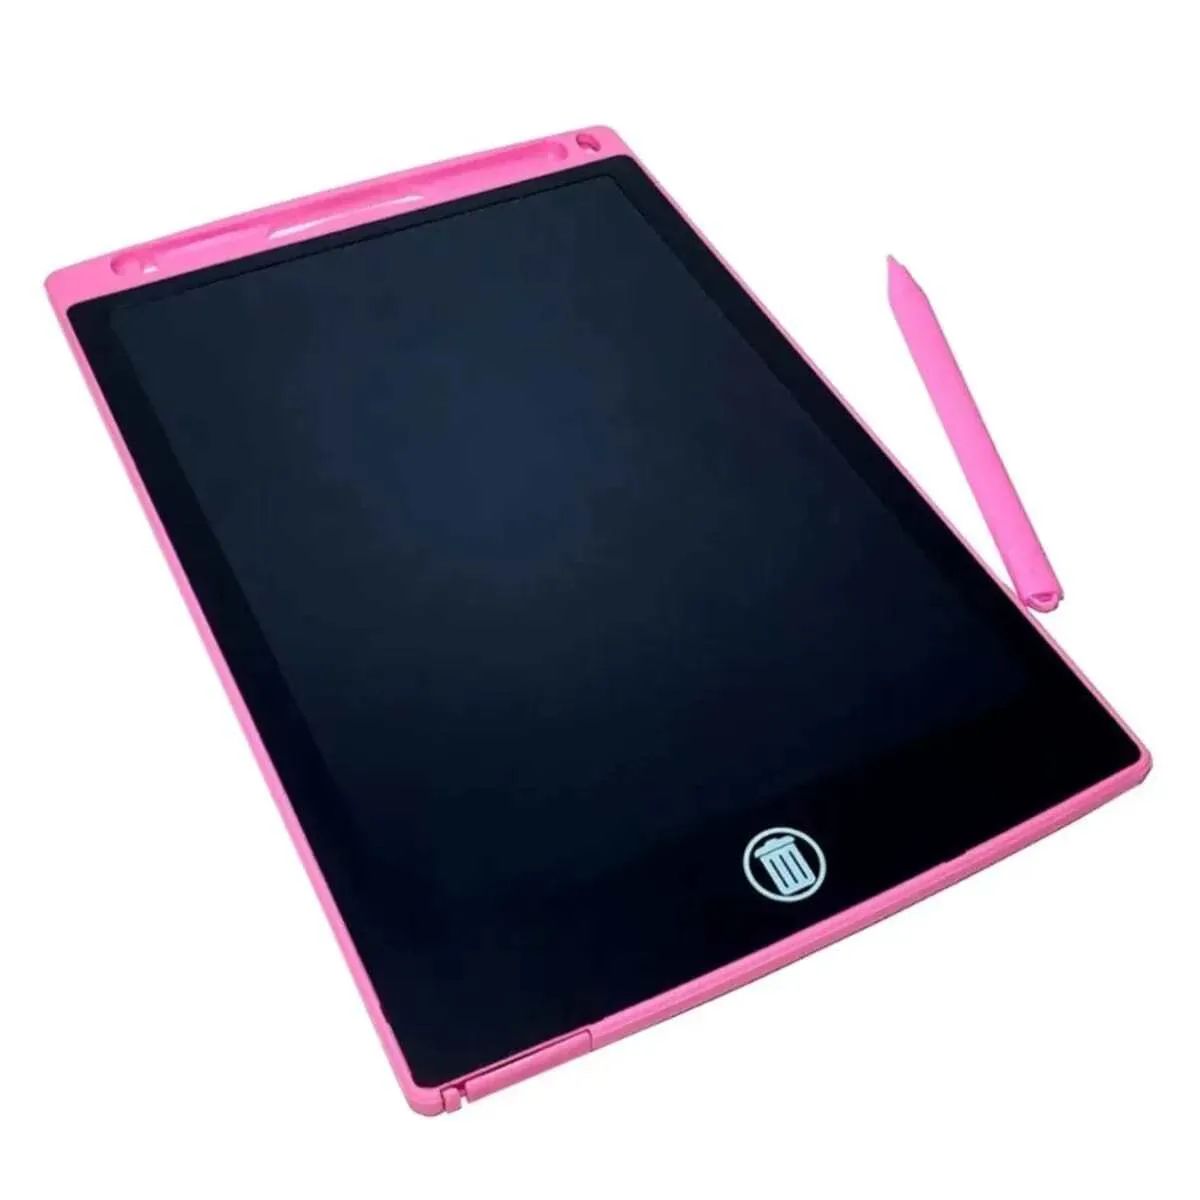 Графический планшет 8.5 LCD Writing Tablet Pink 00658 планшет для рисования детский e writing board графический планшет ной lcd 12 дюймов